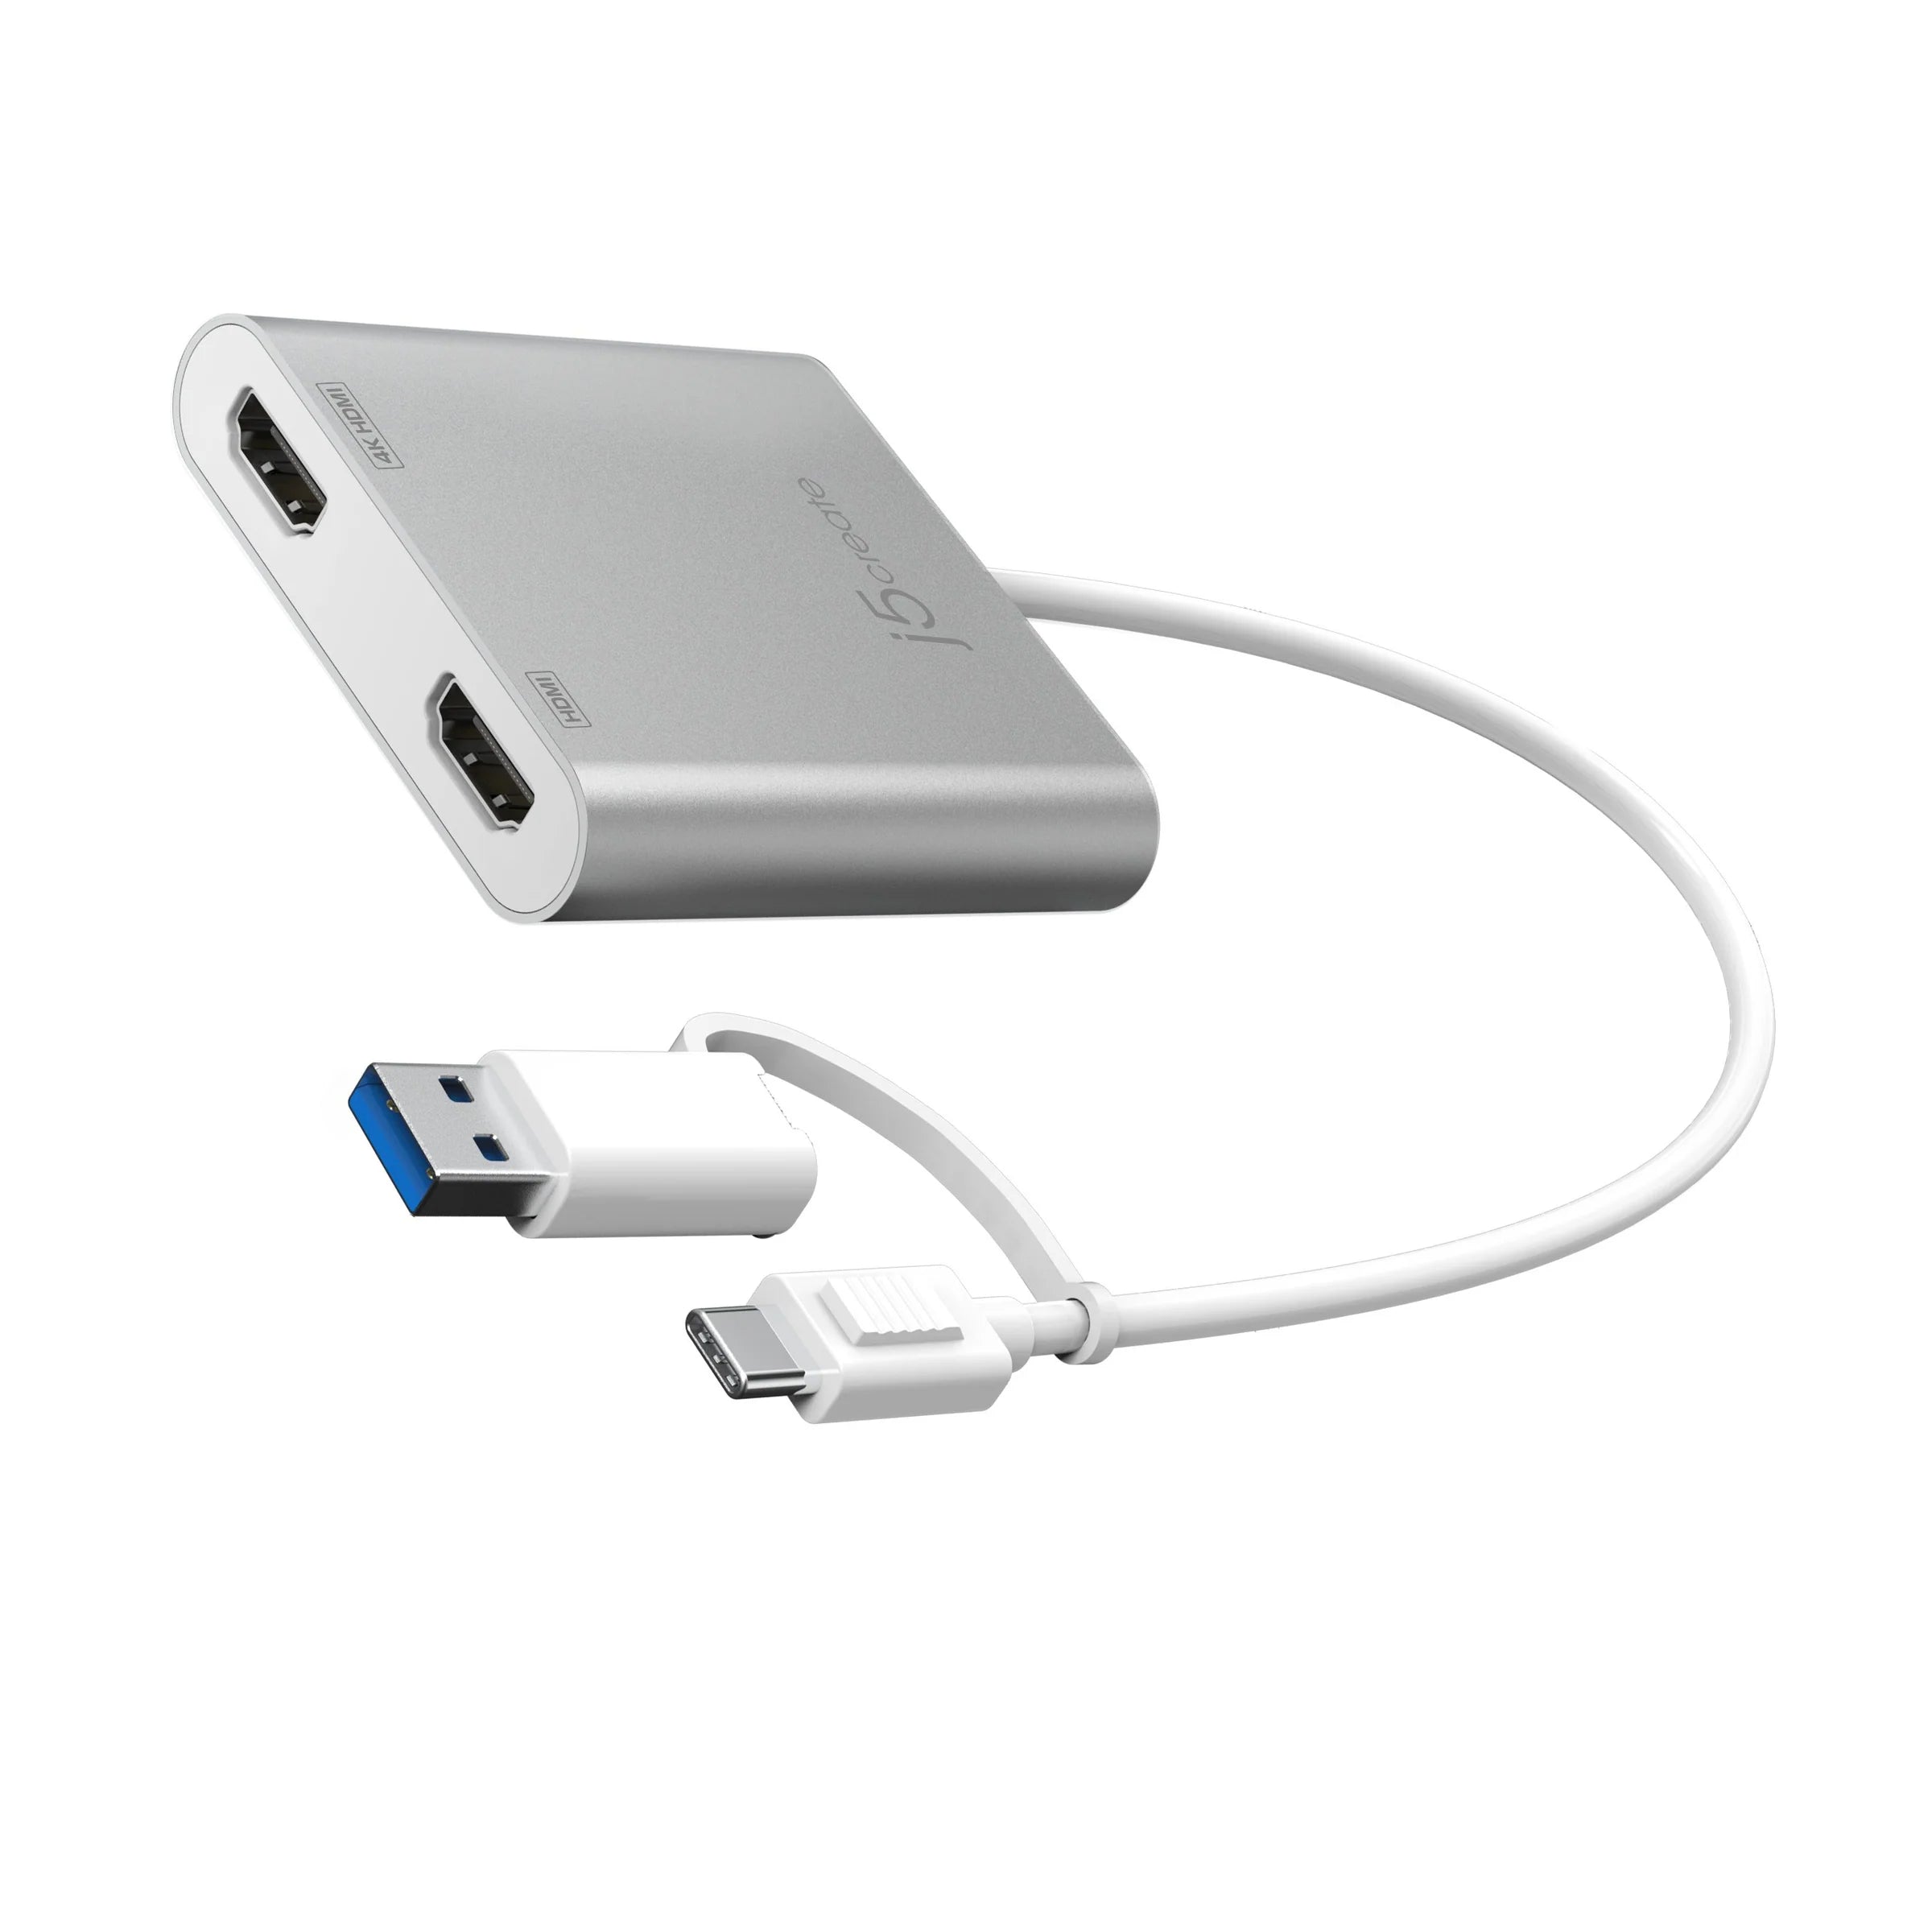 USB-C™ Multi Adapter (10 Functions in 1) – j5create